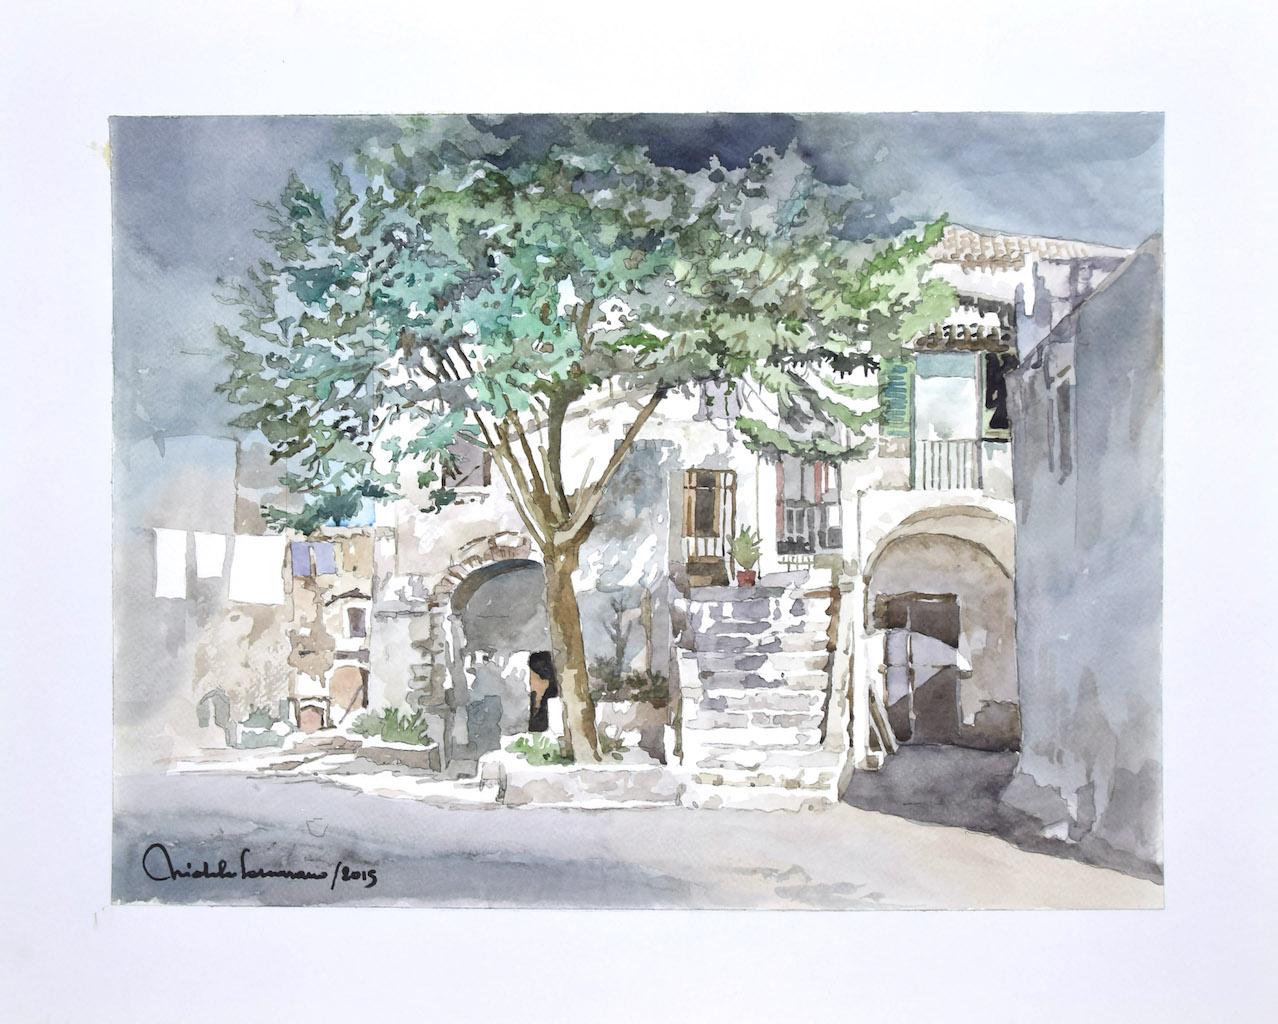 Sicily - Watercolor by Michele Cascarano - 2015